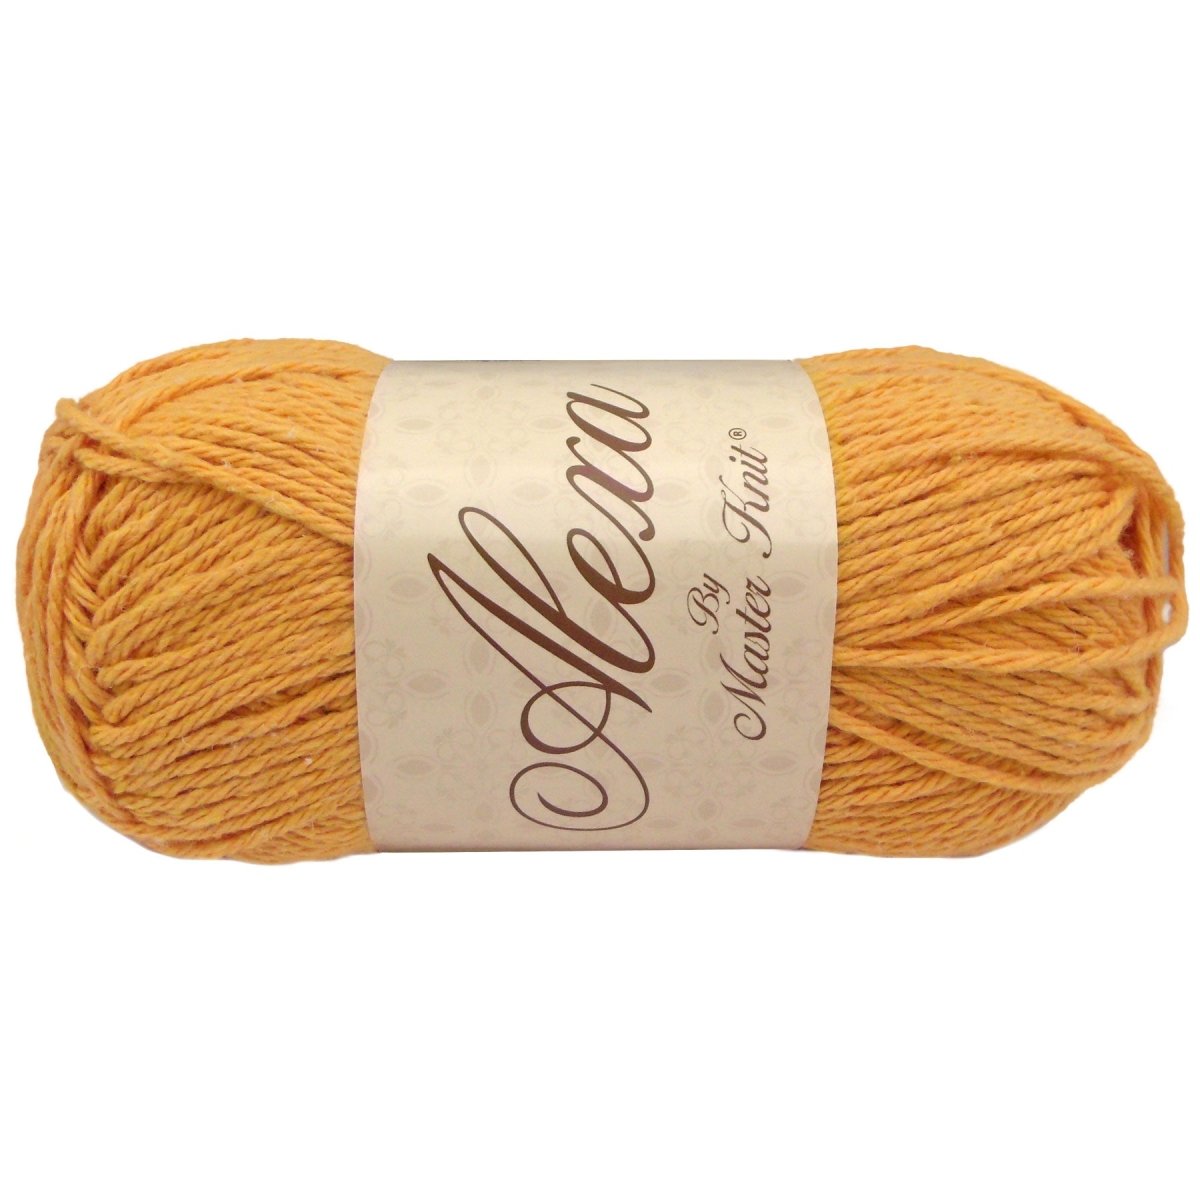 ALEXA - Crochetstores9340-330